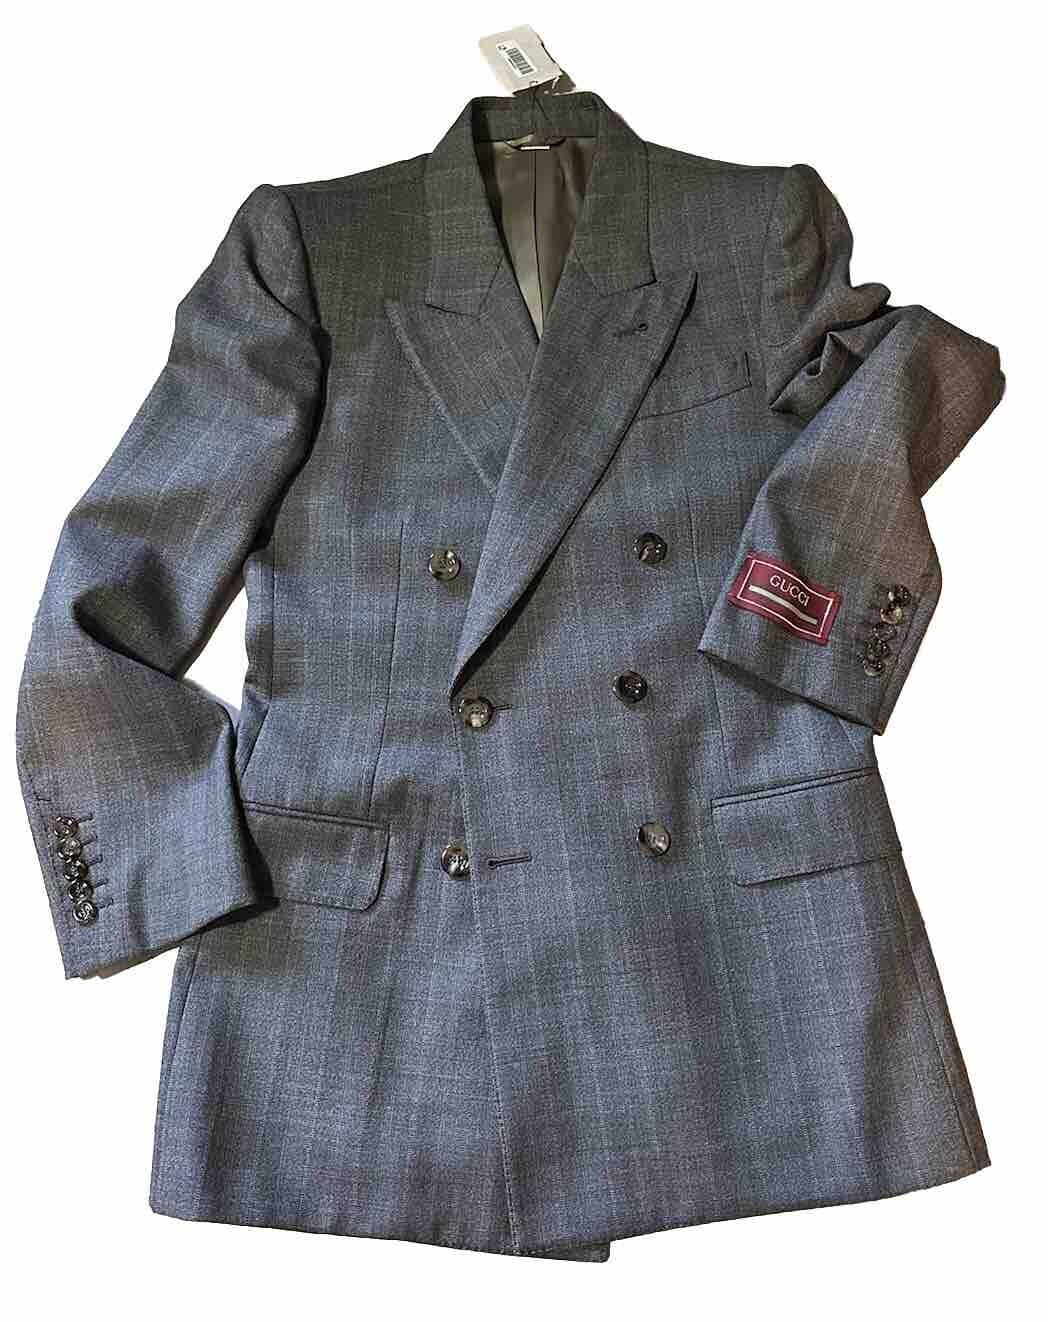 NWT $3600 Gucci Mens Sport Coat Blazer Brown/Gray 36R US/46R Eu Italy